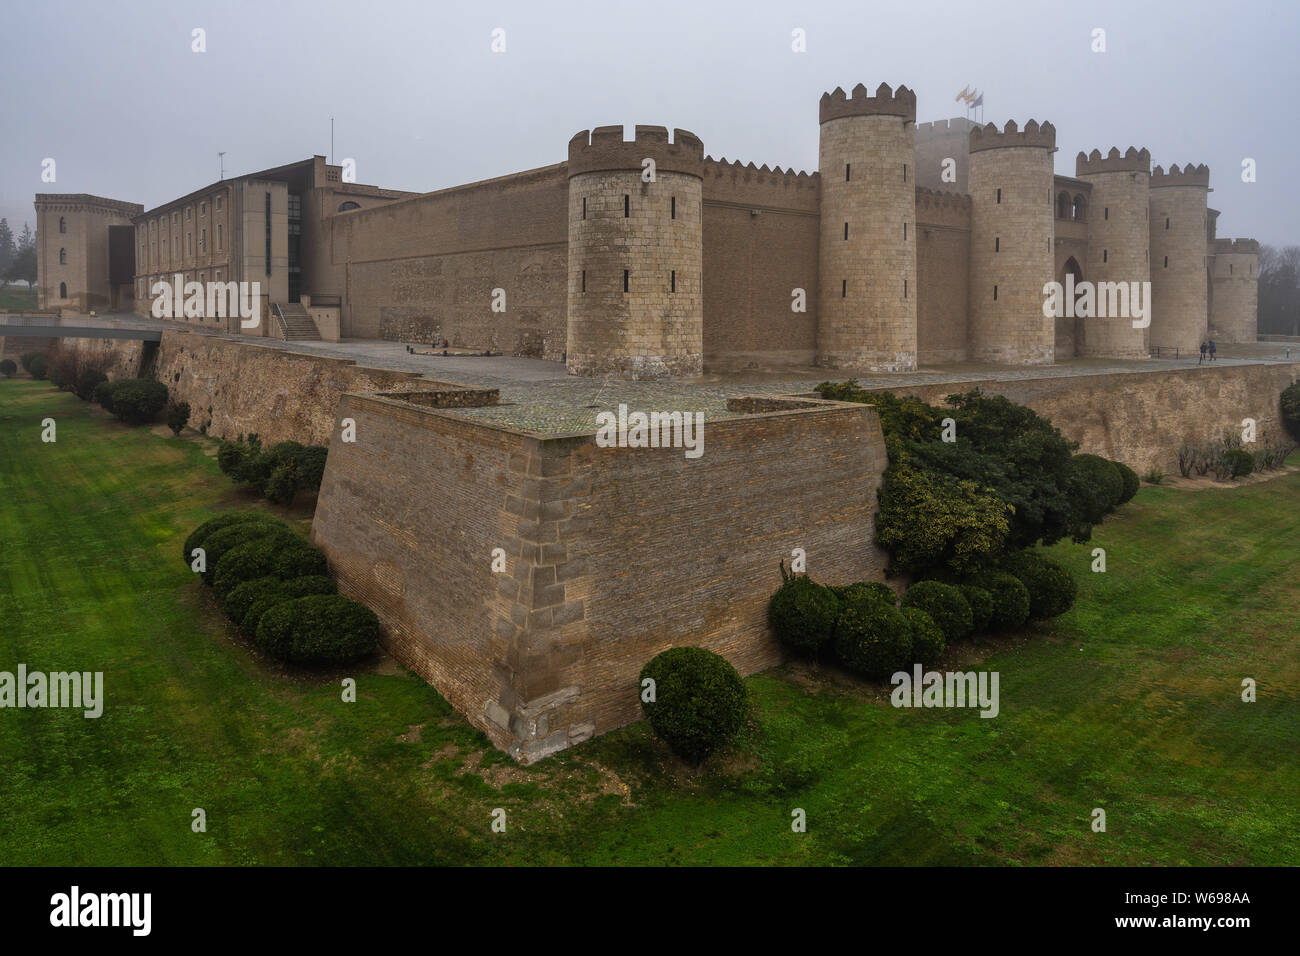 View of Aljaferia Palace in a foggy winter day, Zaragoza, Aragon, Spain Stock Photo